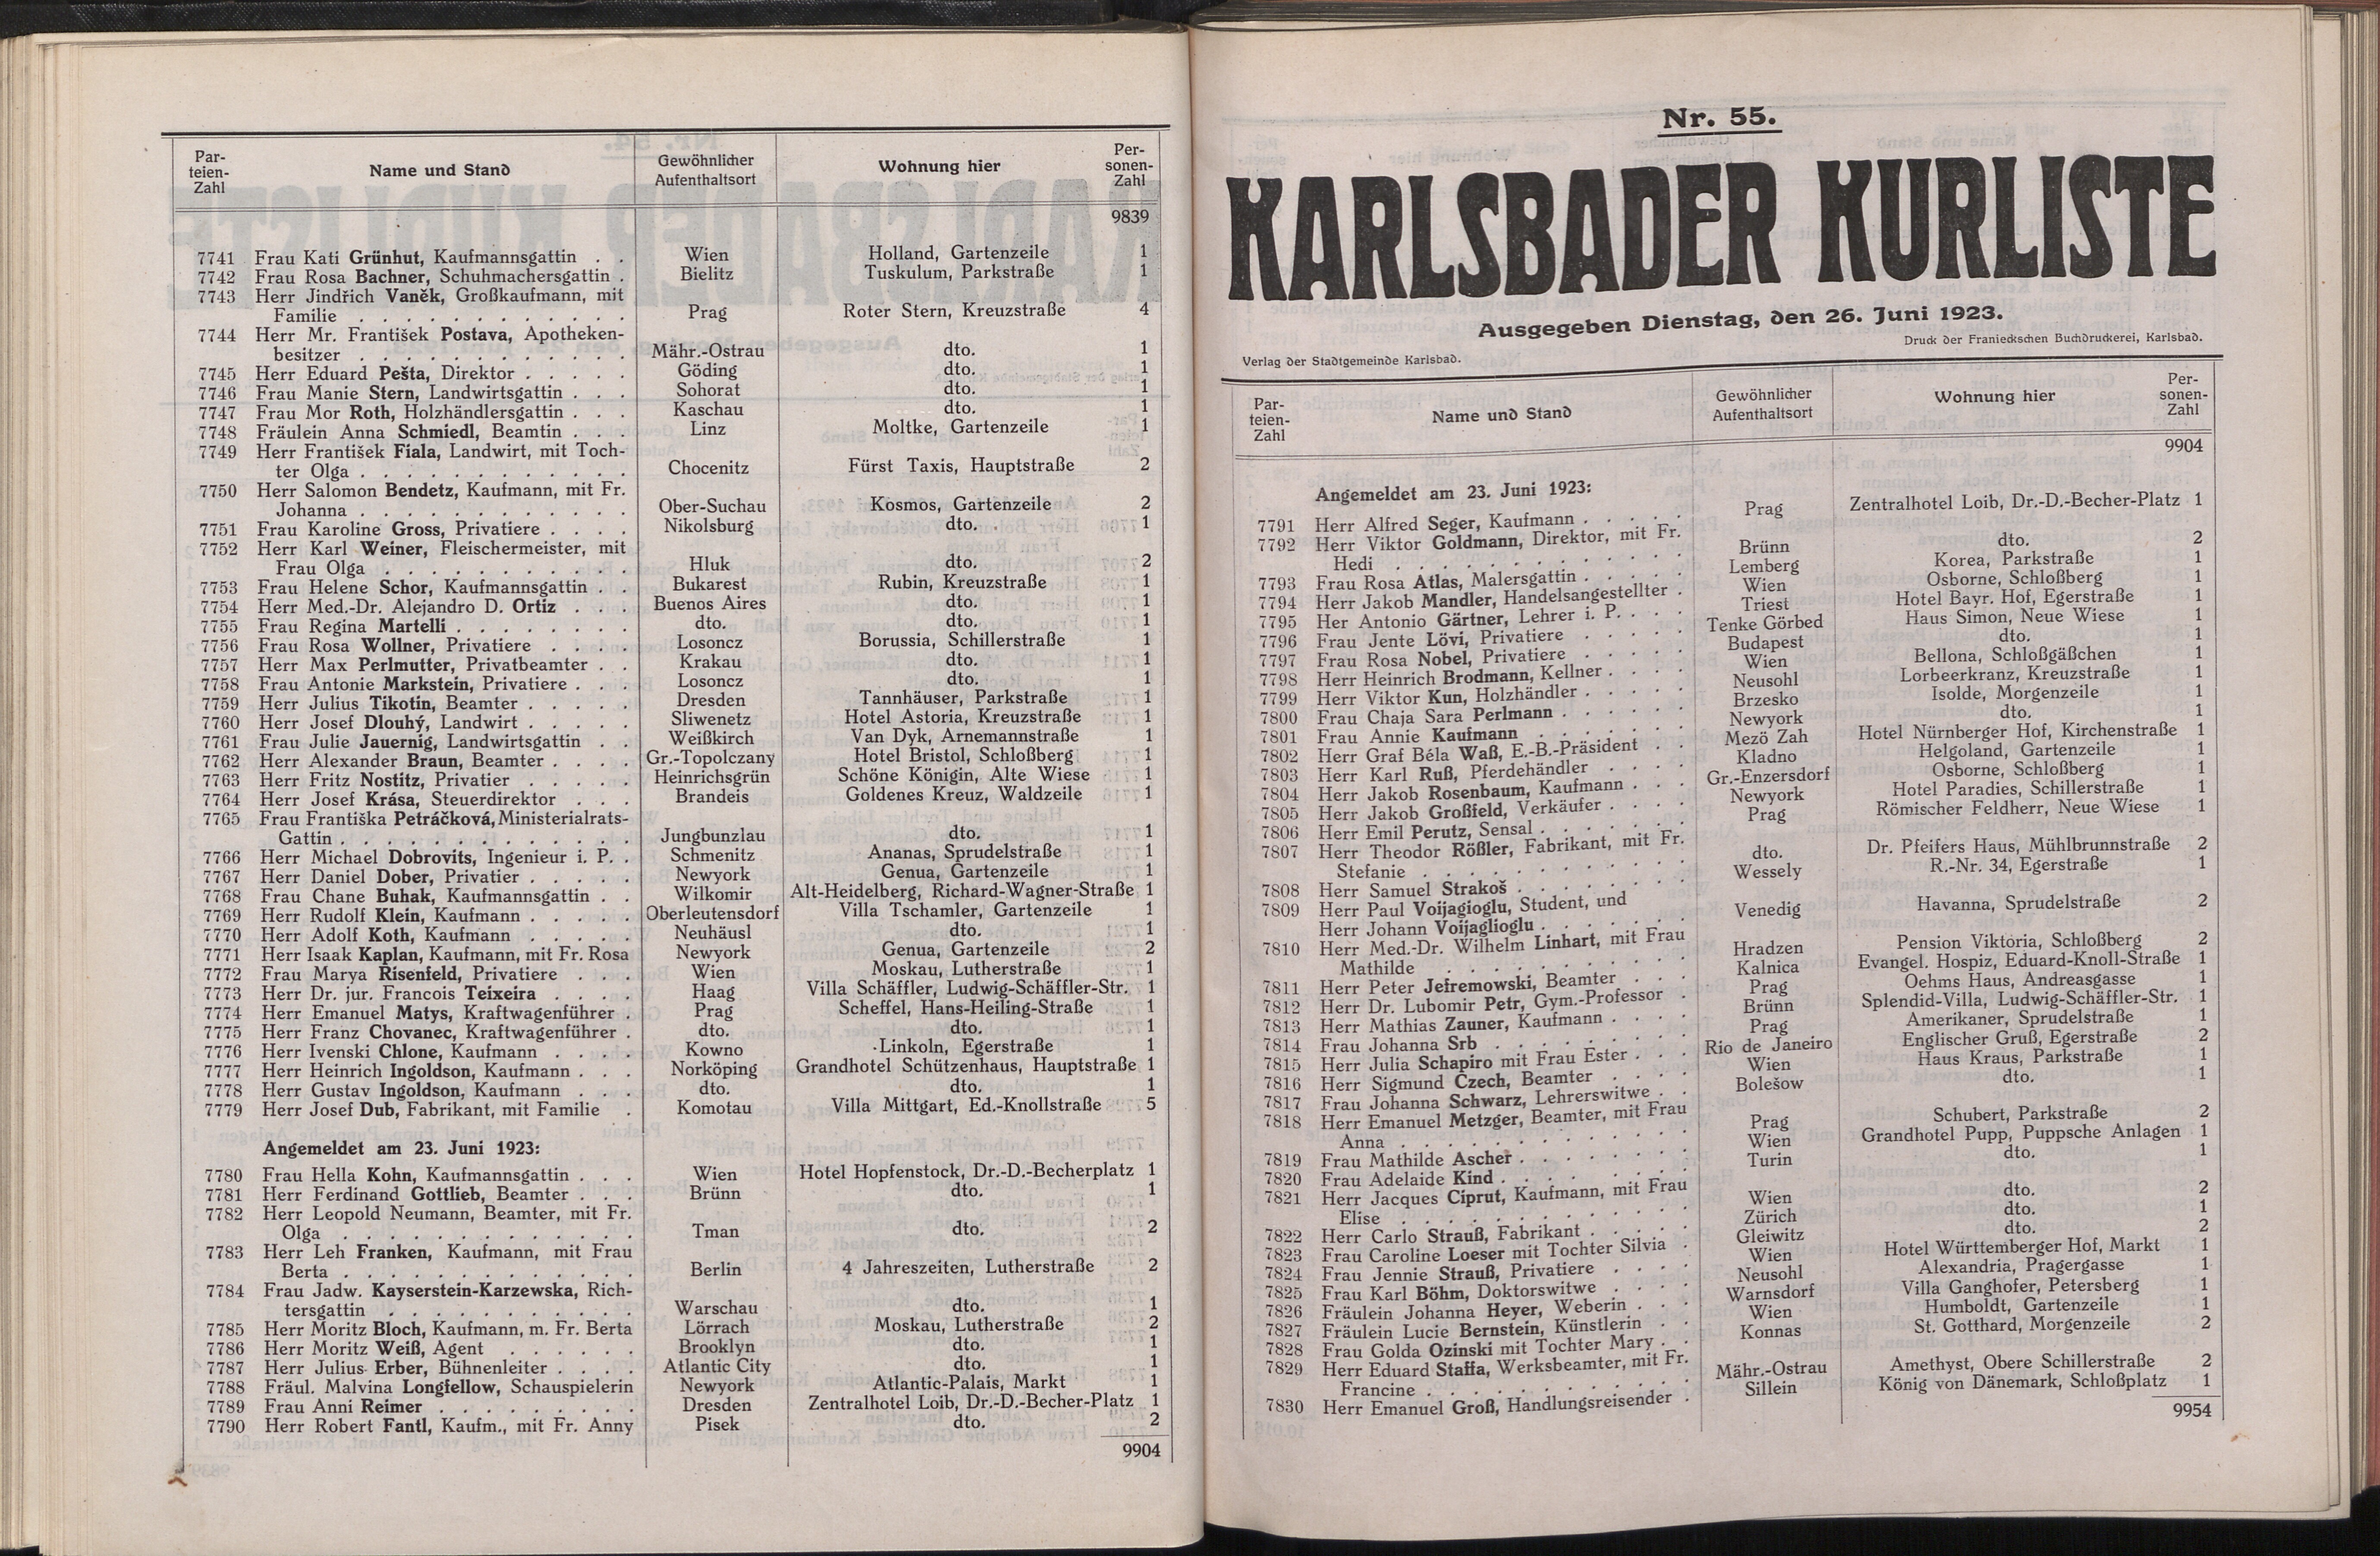 91. soap-kv_knihovna_karlsbader-kurliste-1923_0910